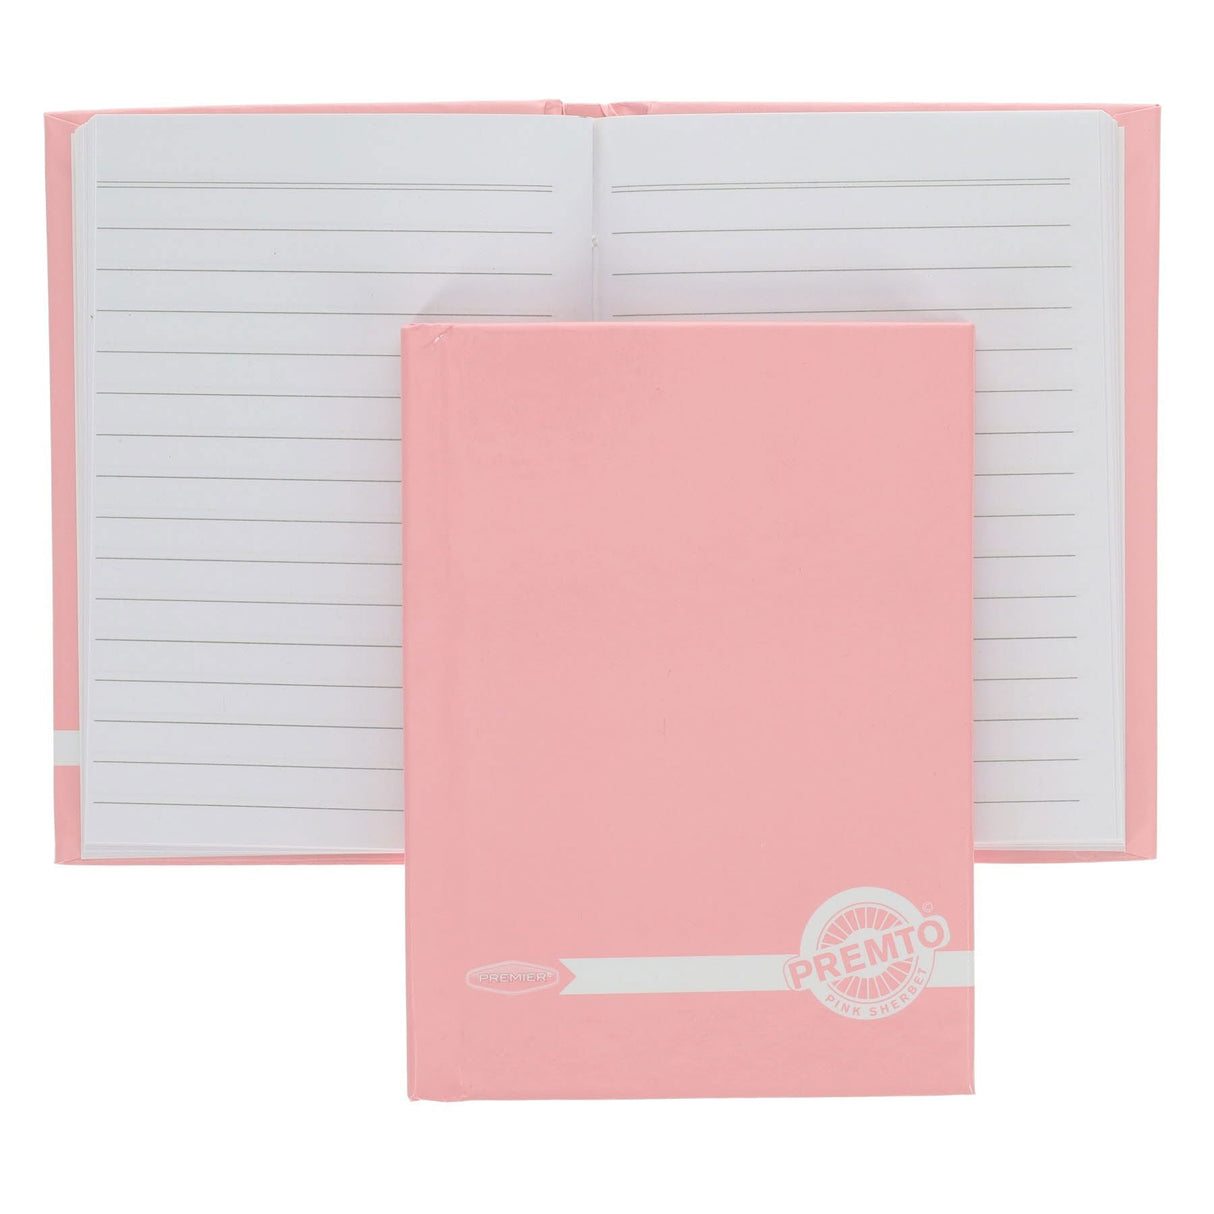 Premto Pastel A6 Hardcover Notebook - 160 Pages - Pastel - Pink Sherbet-A6 Notebooks-Premto|StationeryShop.co.uk